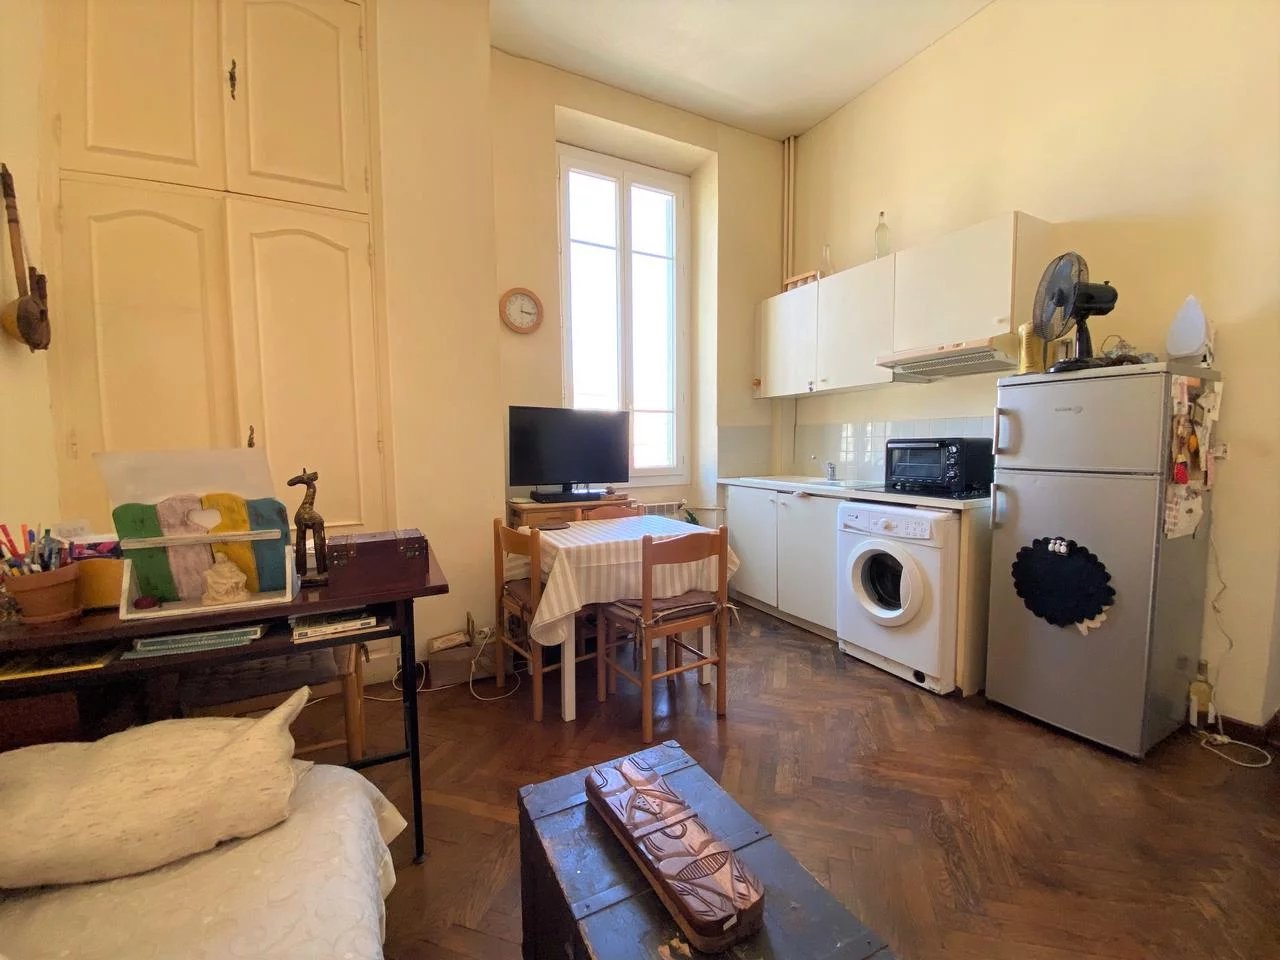 Appartement  2 Locali 30m2  In vendita   279 000 €